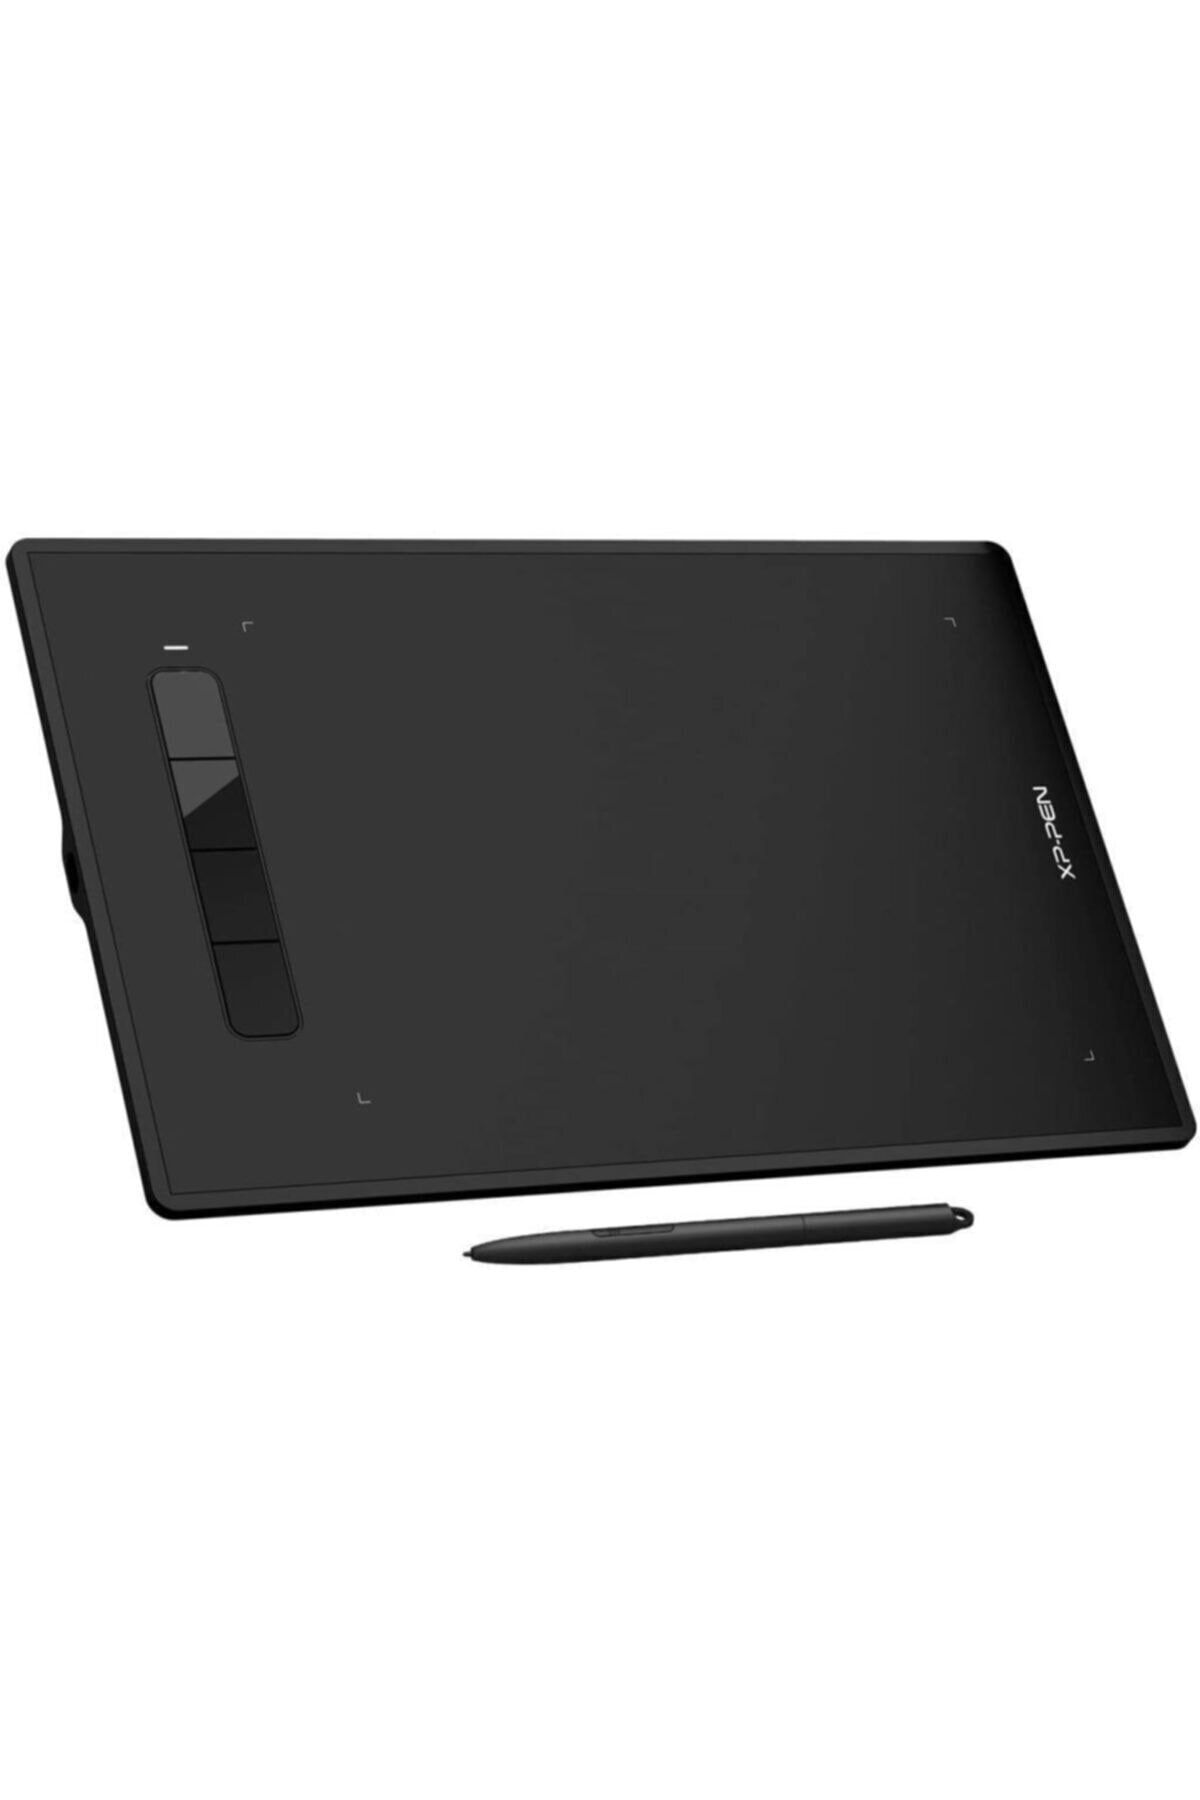 XP-Pen Star G960s 12.5x8.25 Inç Grafik Tablet 8192 Basınç 4 Tuşlu